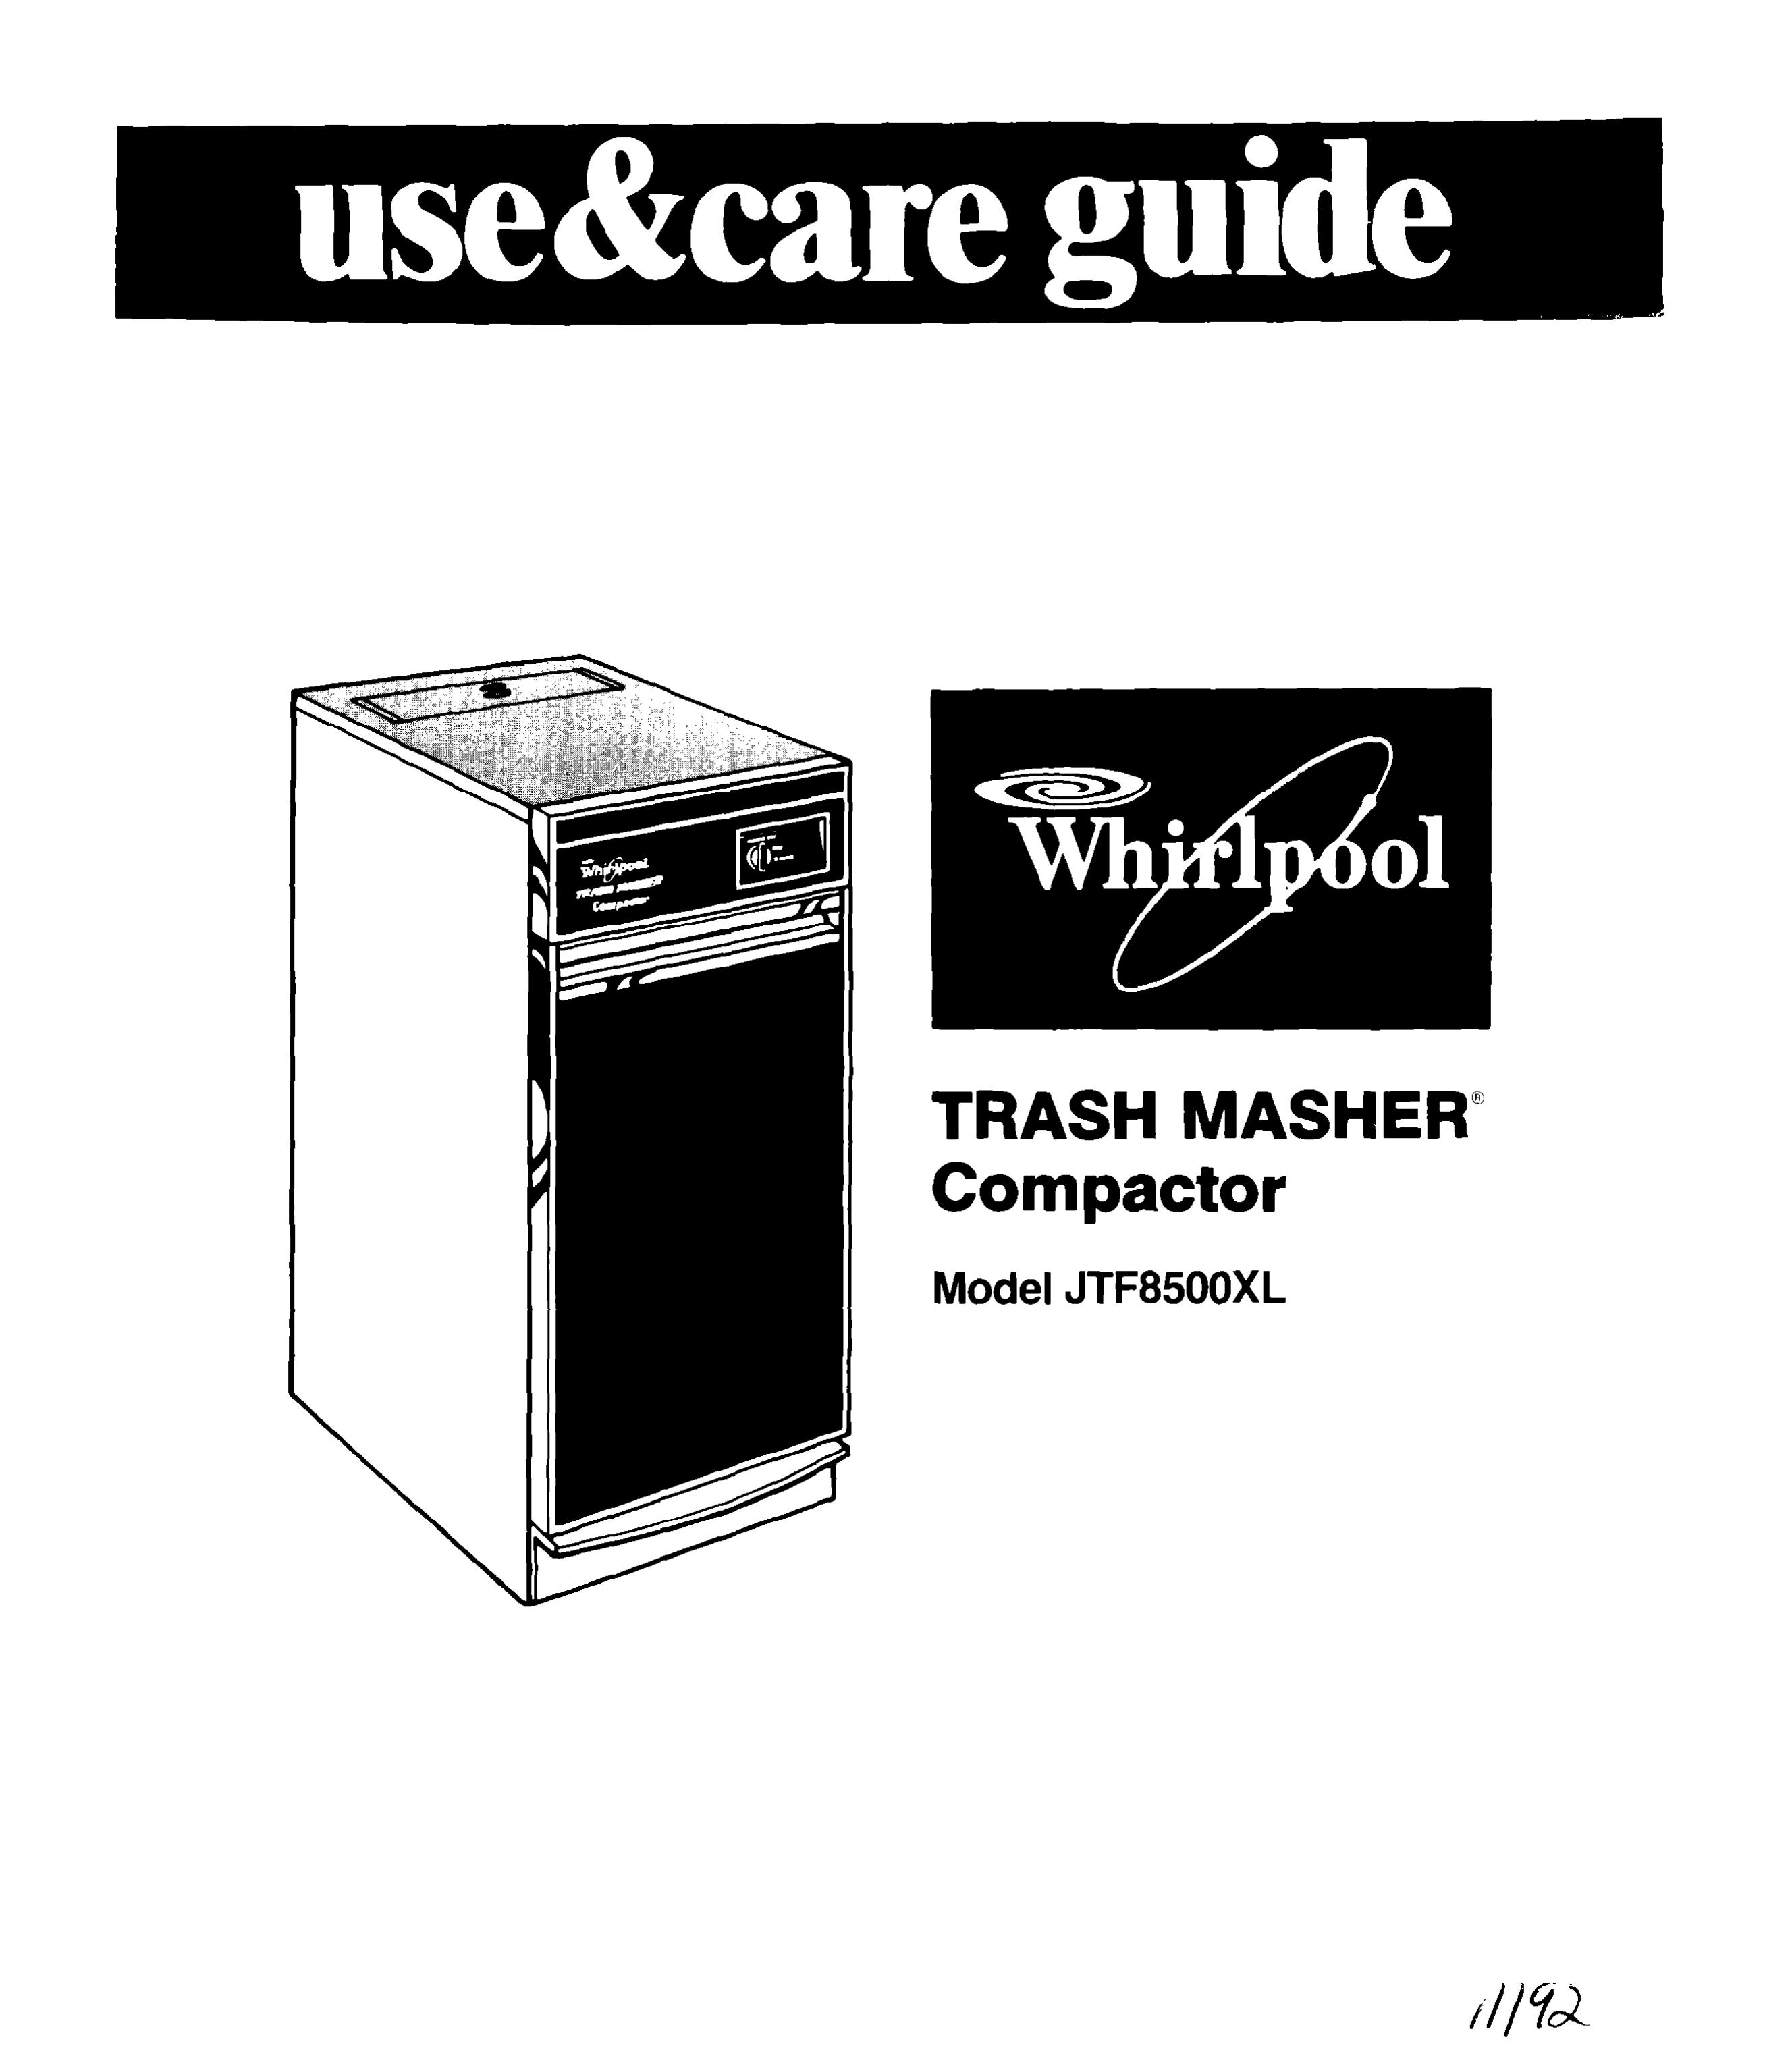 Whirlpool Trash Compactor Trash Compactor User Manual